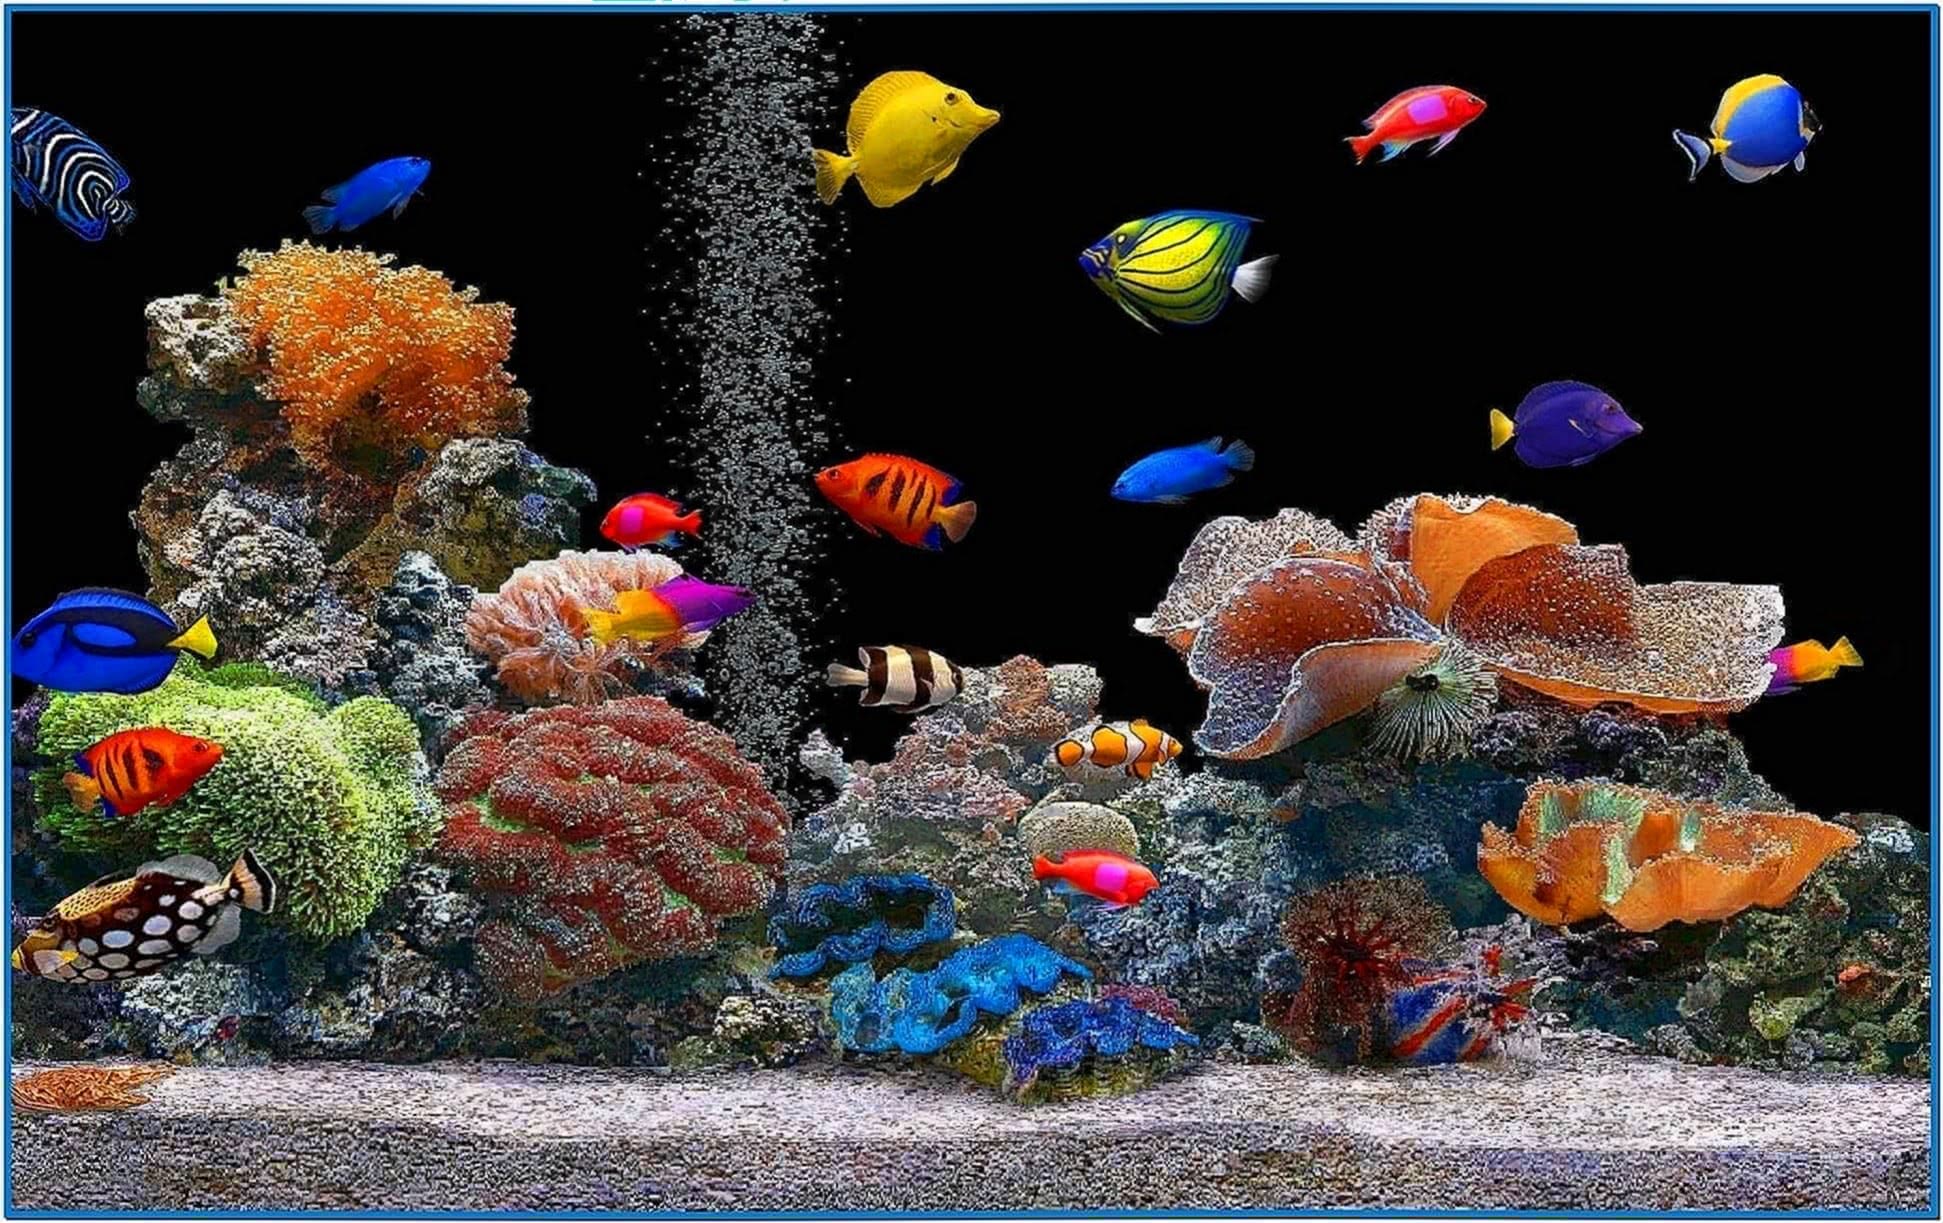 Hdtv screensaver aquarium - Download free